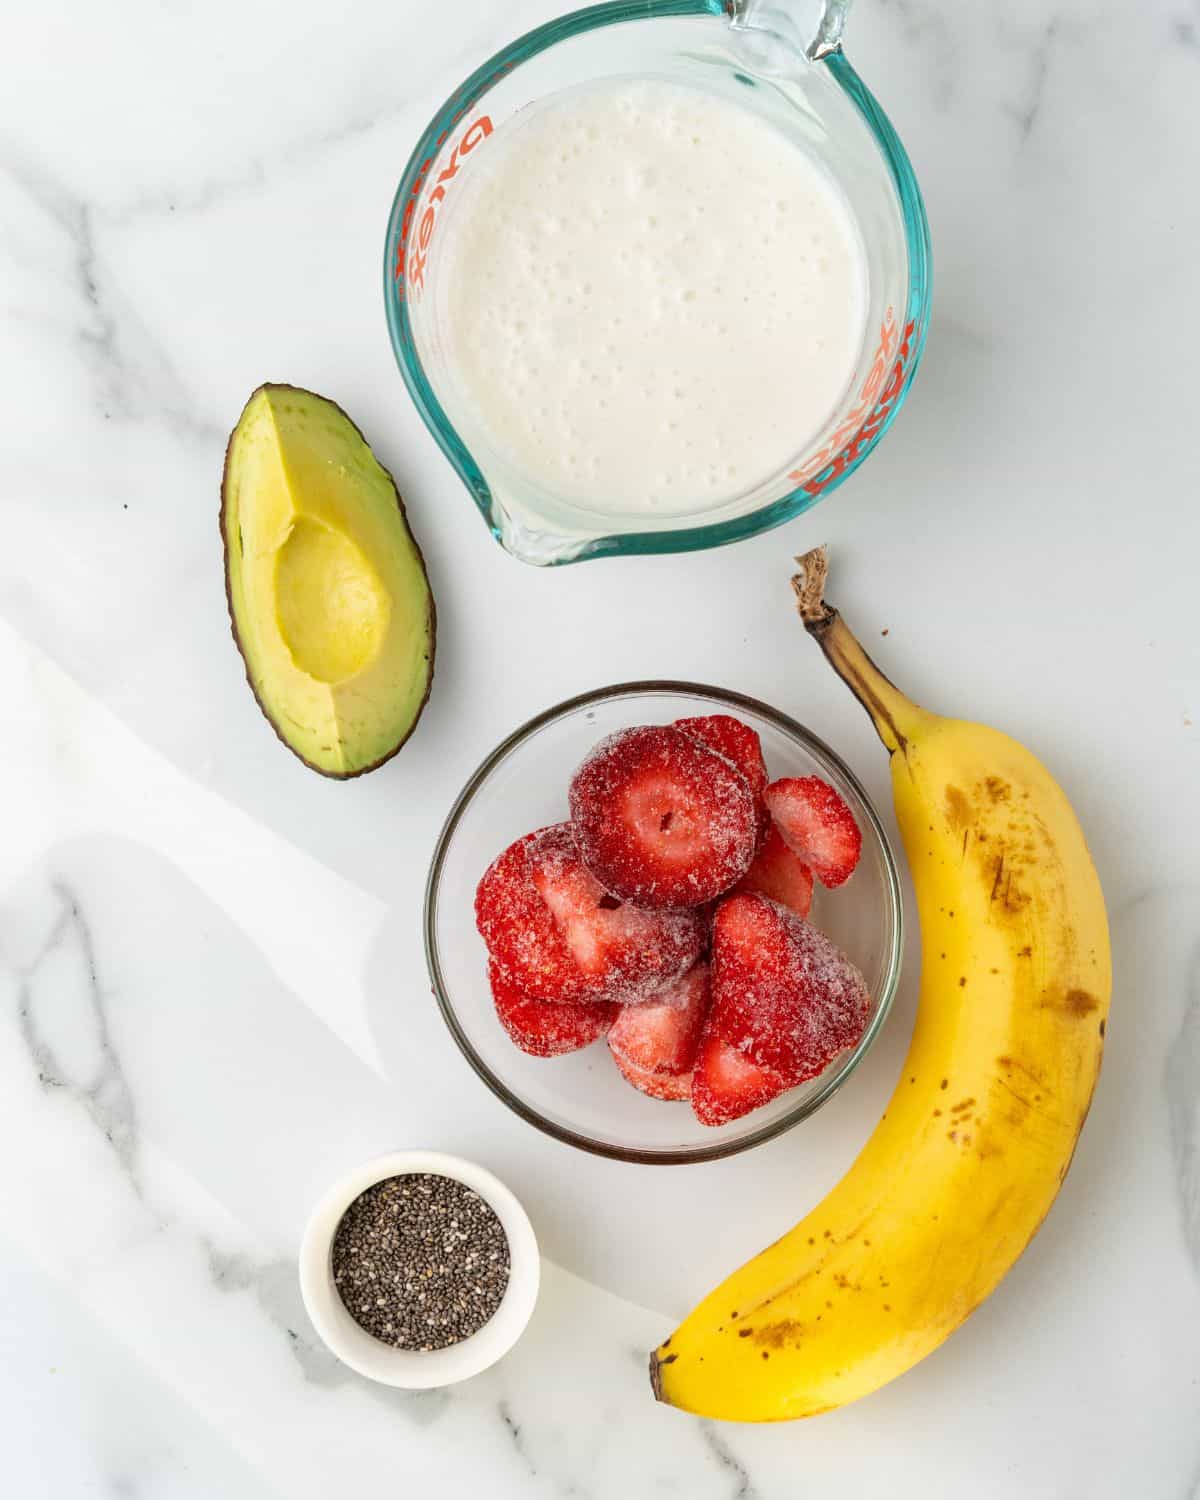 ingredients to make strawberry avocado banana smoothie.